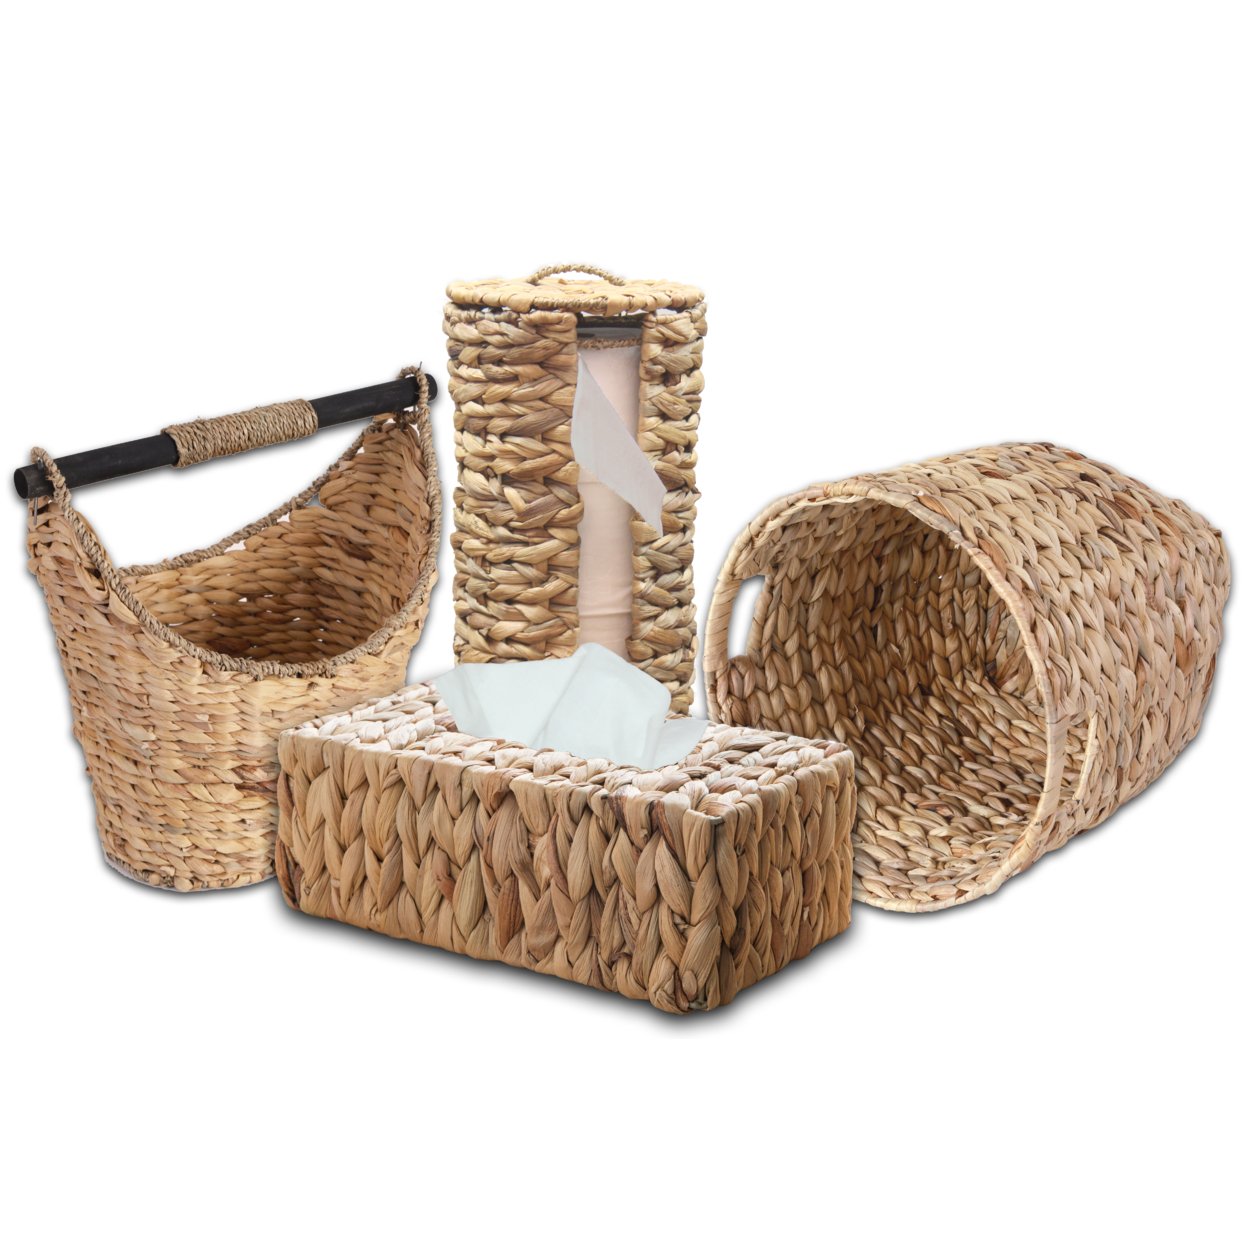 Rustic Water Hyacinth Vanity Bathroom Set, Set Of 4 - Magazine Basket, Tissue Roll Holder, Tissue Box Cover, And Wastebasket